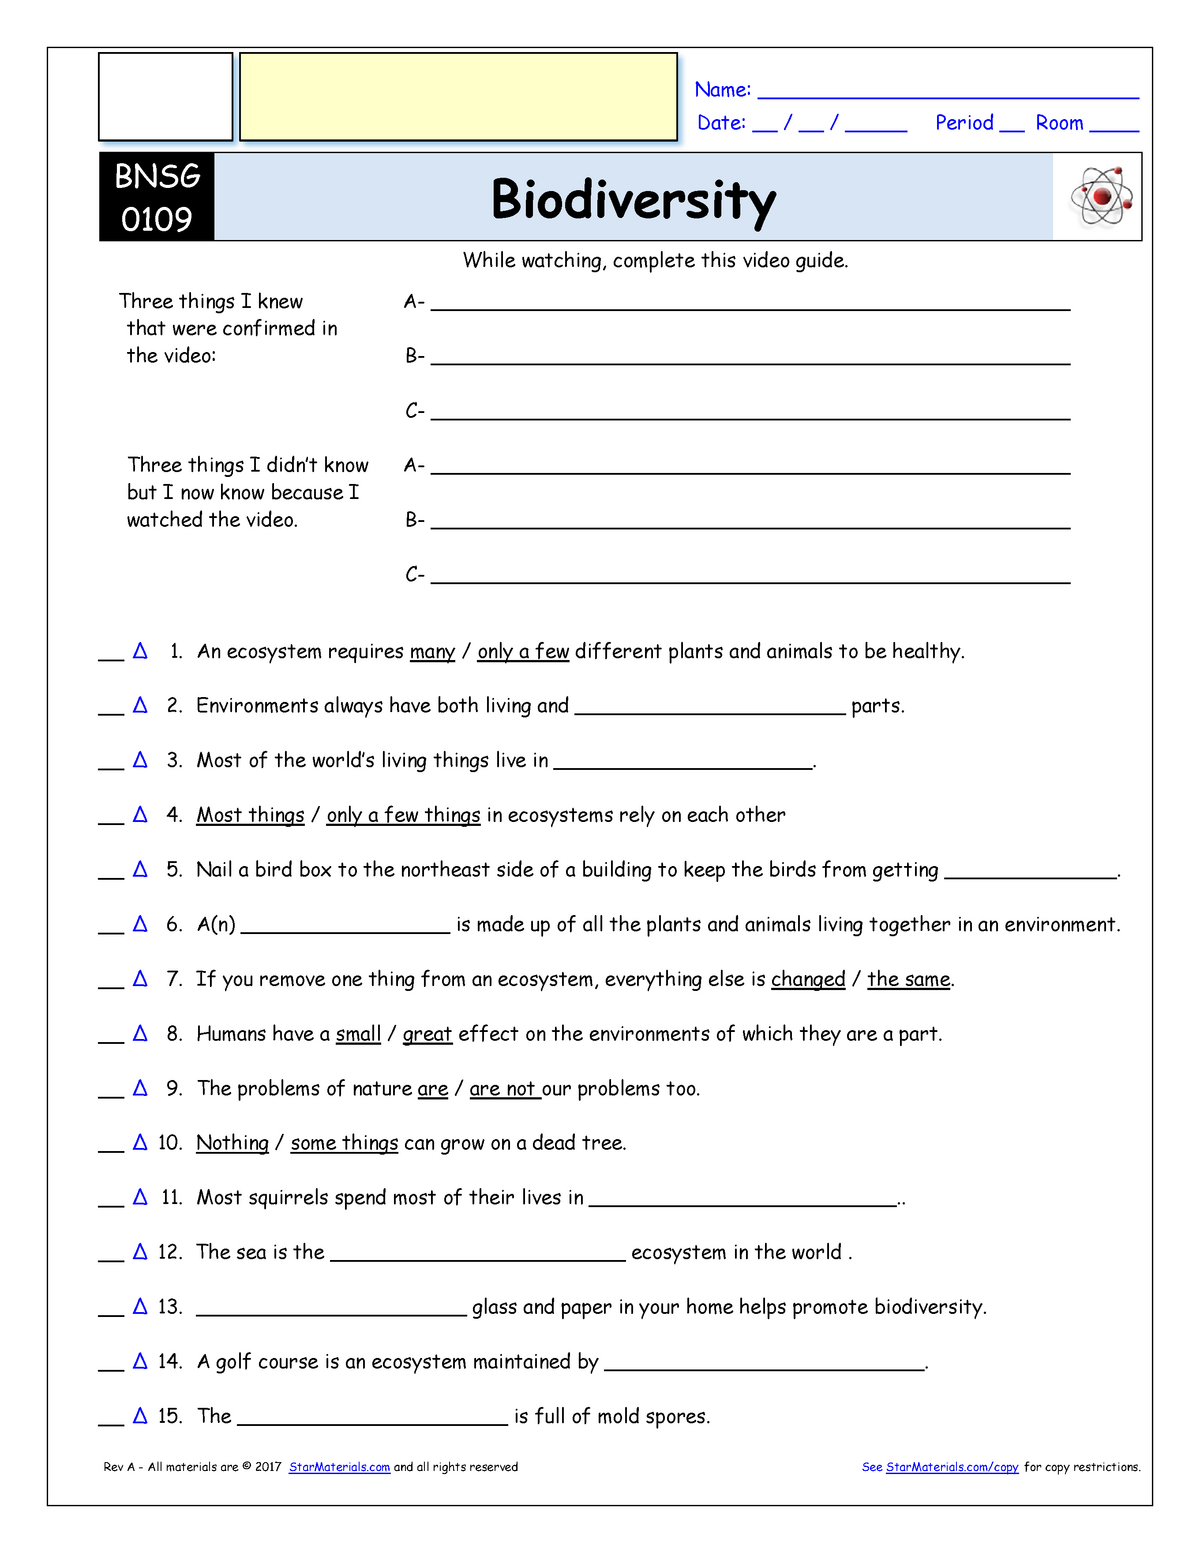 Biodiversity Bill Nye Video Notes Page - BIOL 21 - WVU - StuDocu Regarding Bill Nye Biodiversity Worksheet Answers